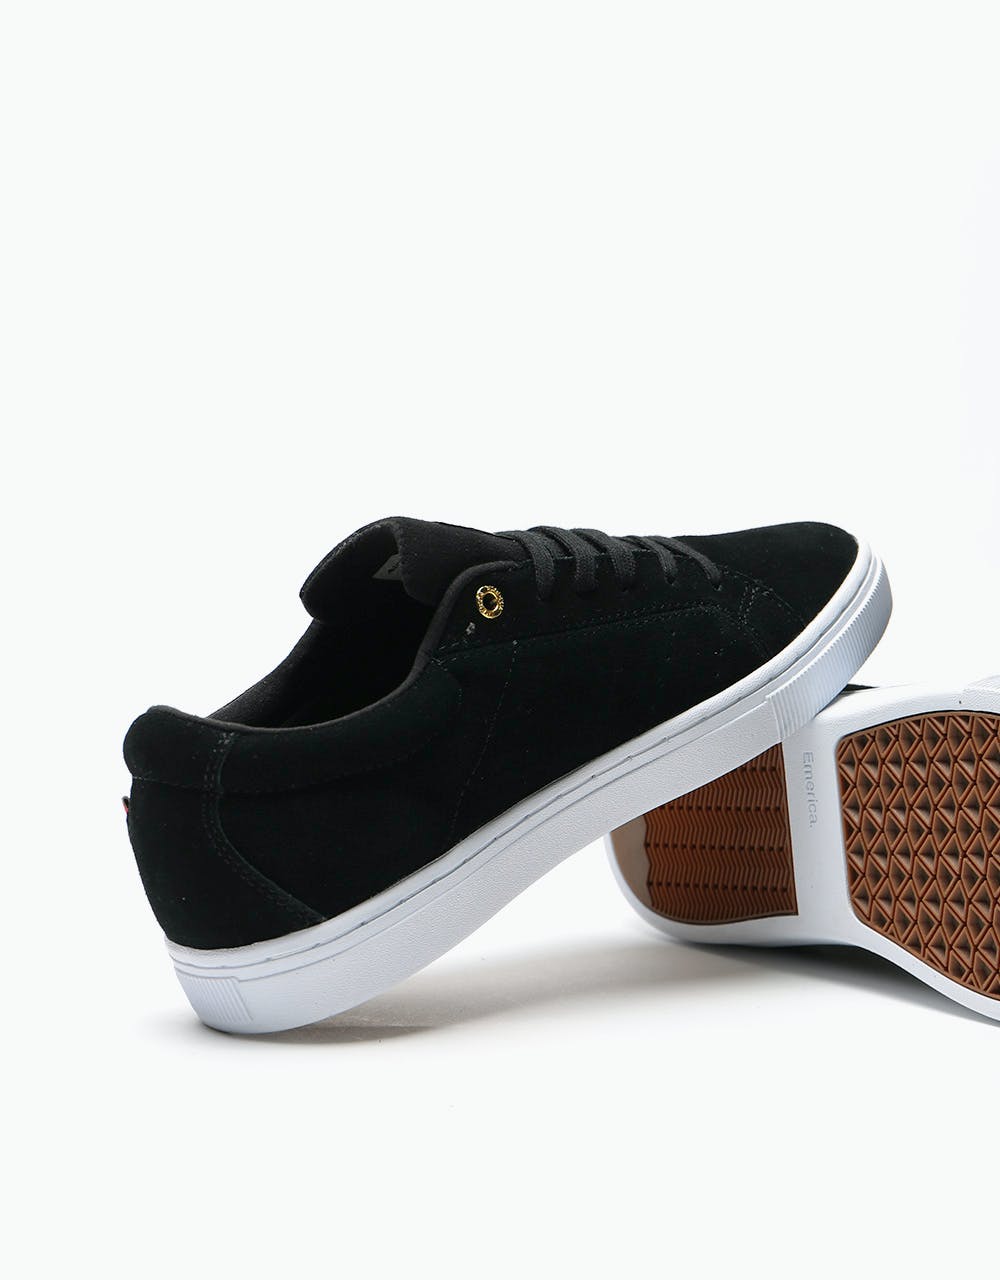 Emerica Americana Skate Shoes - Black/White/Gold